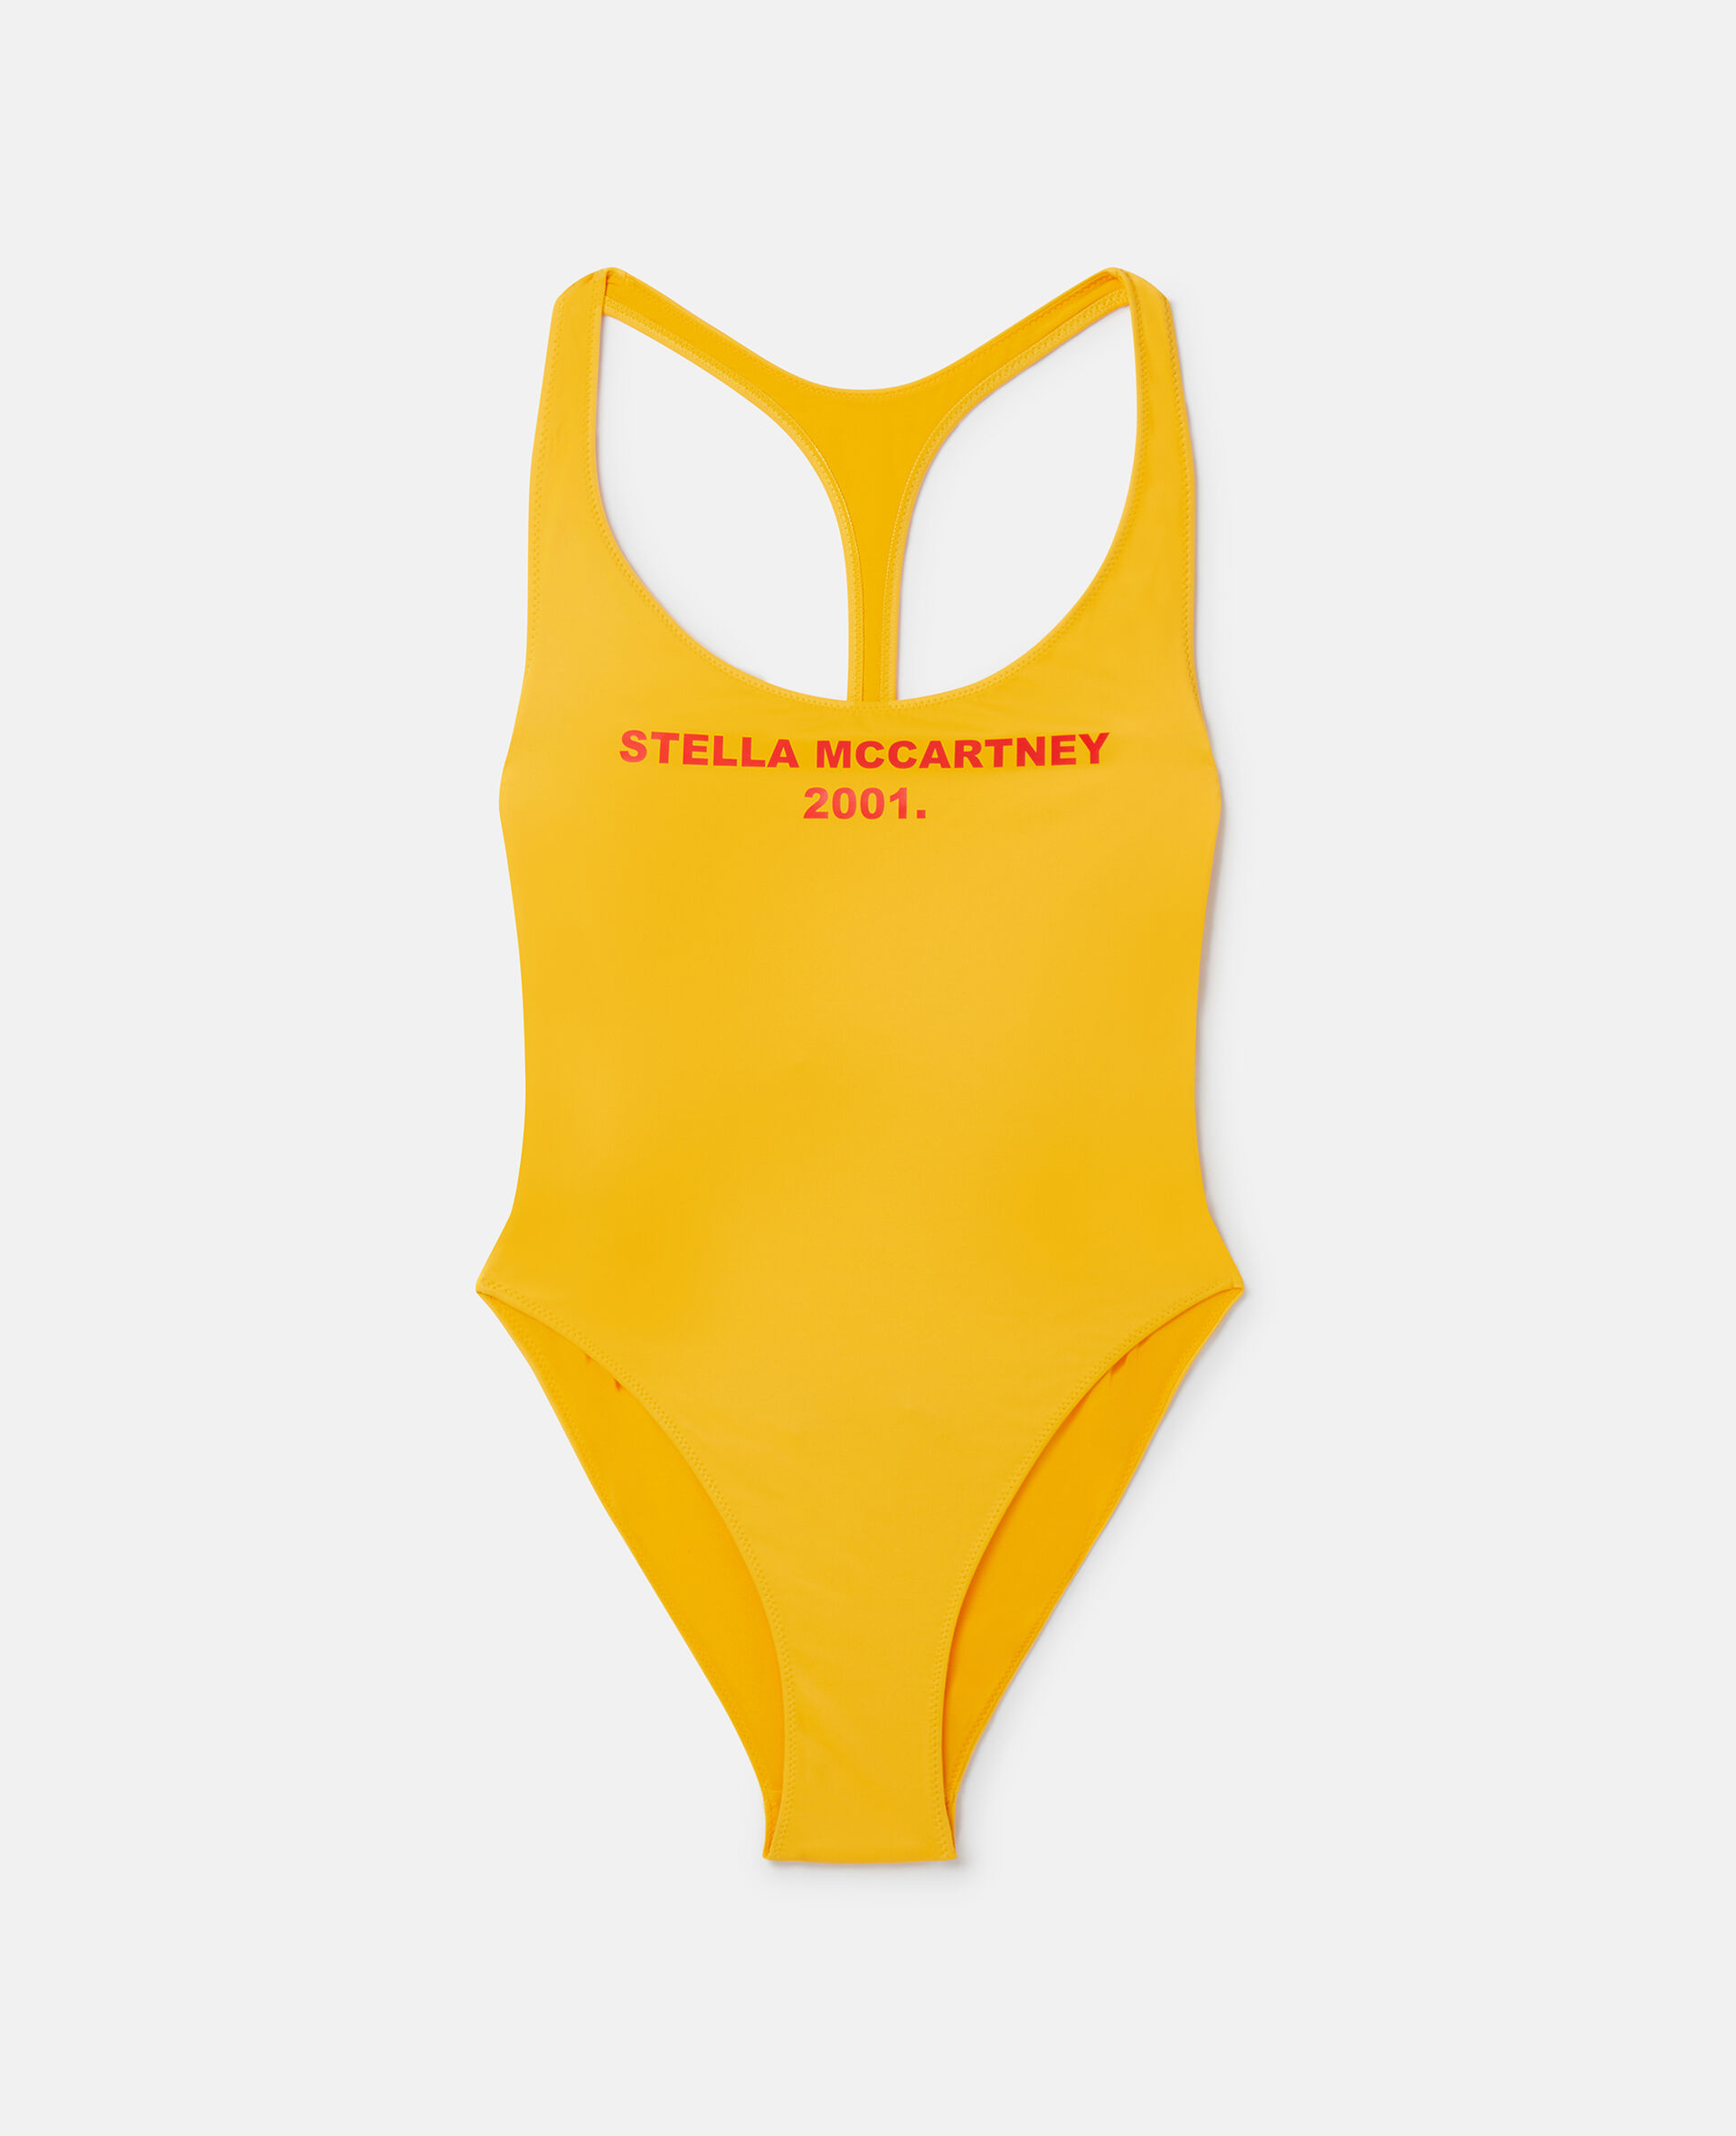 Stella McCartney 2001. Print Swimsuit-Yellow-large image number 0